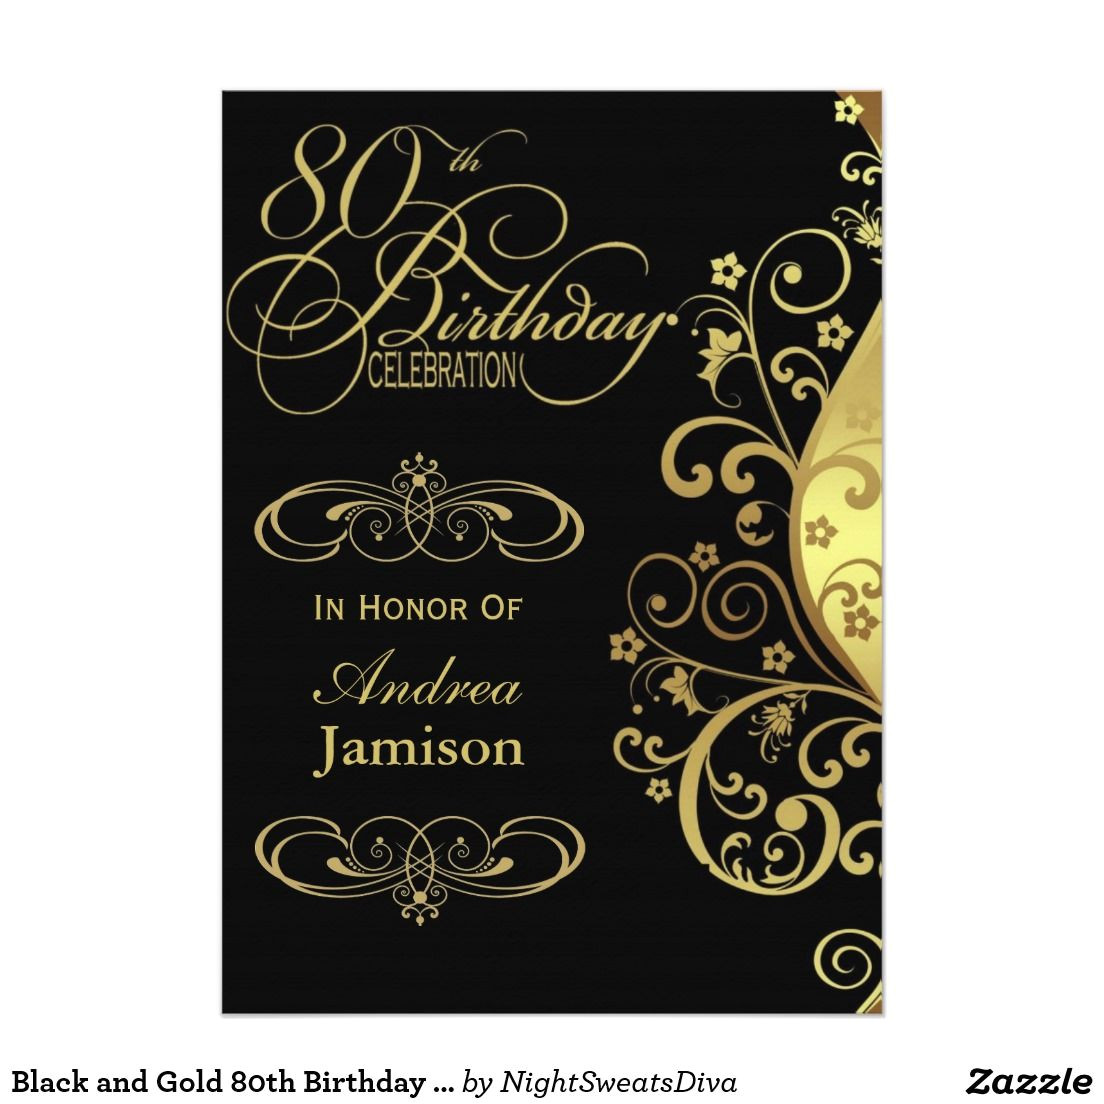 Retirement Party Invitation Card India Black and Gold 80th Birthday Party Invitation Zazzle Com